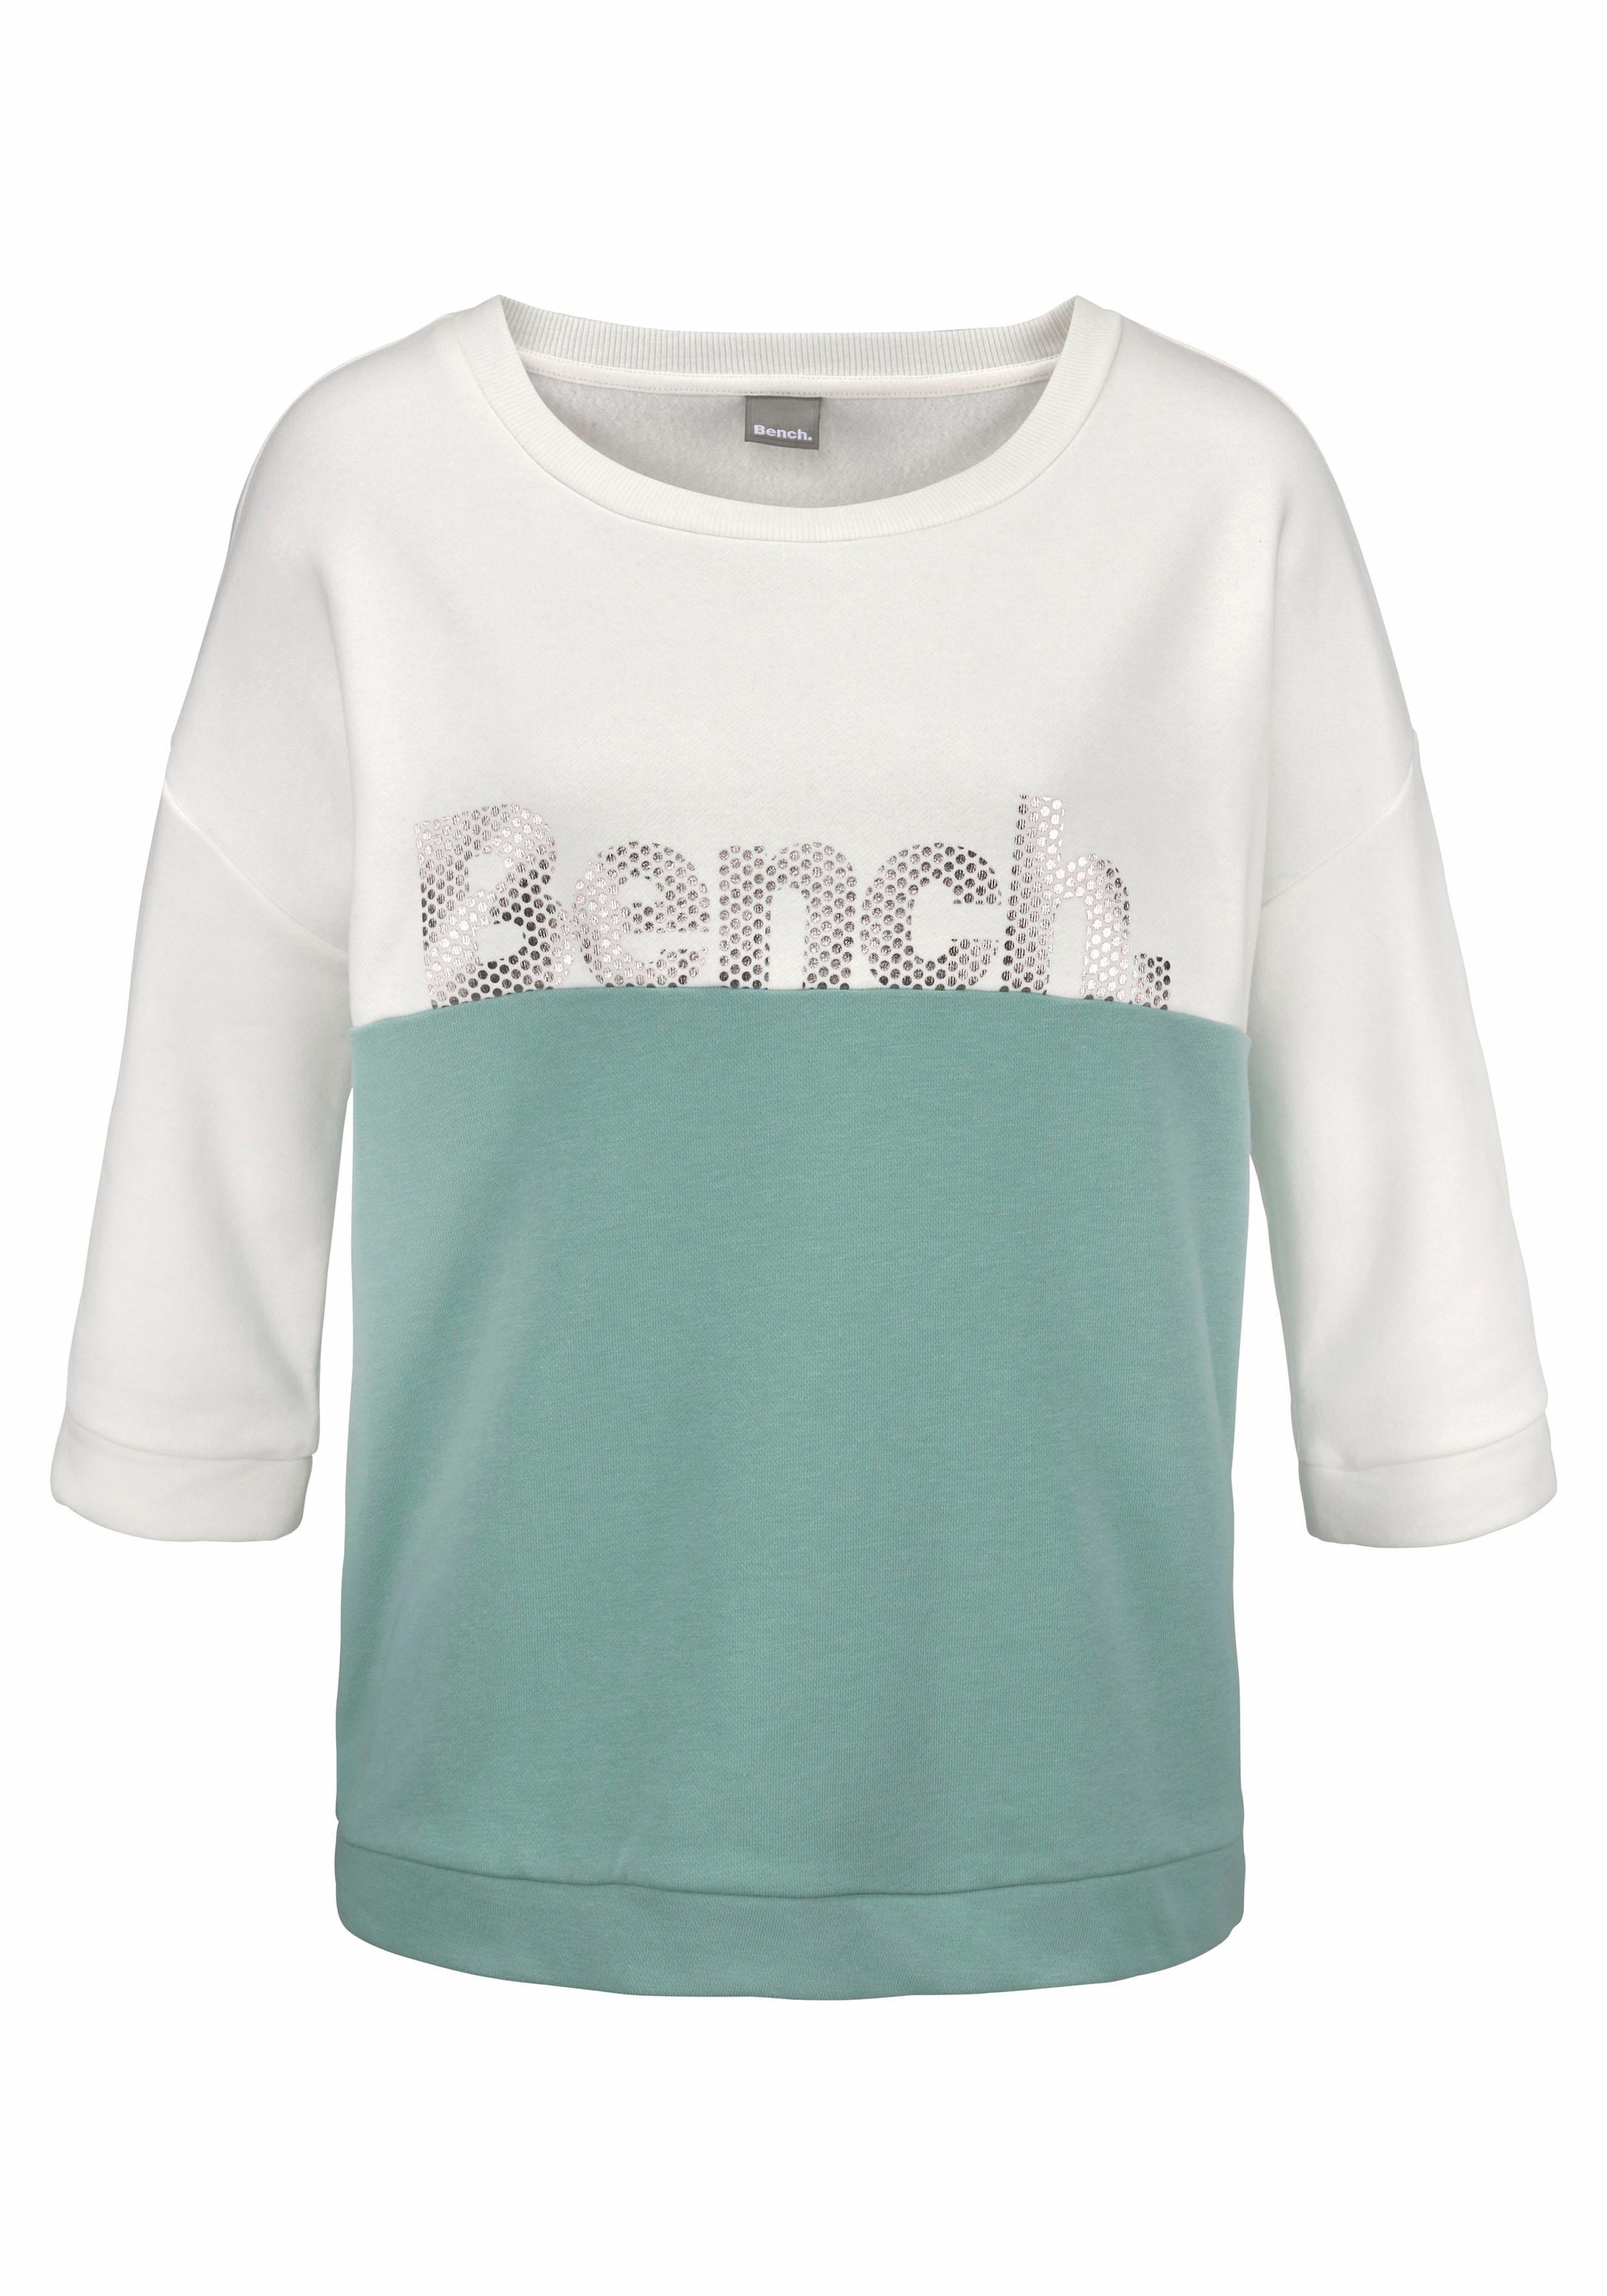 Bench. Sweatshirt, im Colorblocking Design, Loungewear, Loungeanzug shoppen